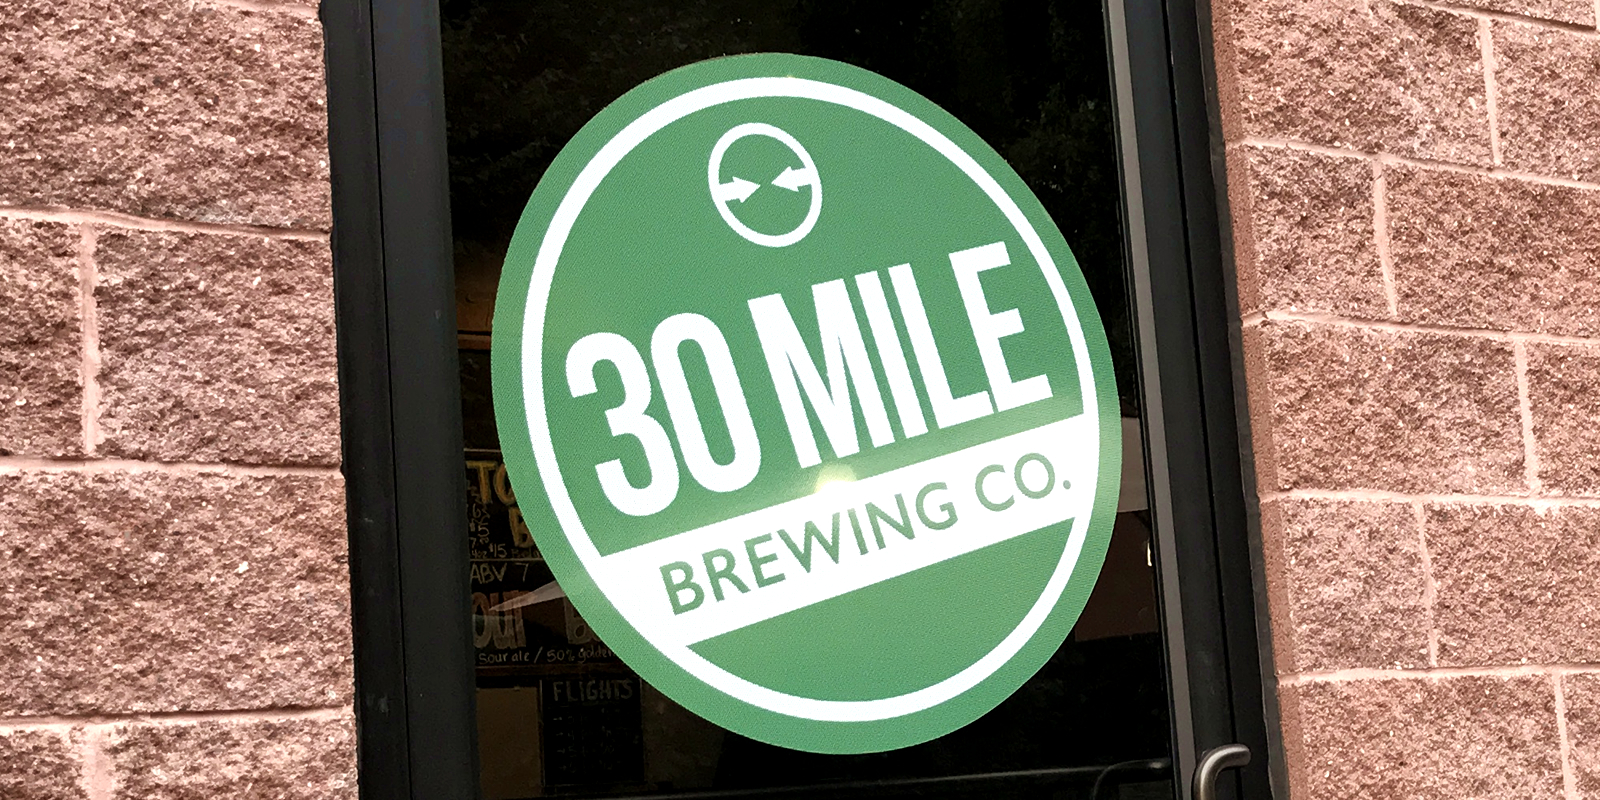 30 Mile Brewing Company